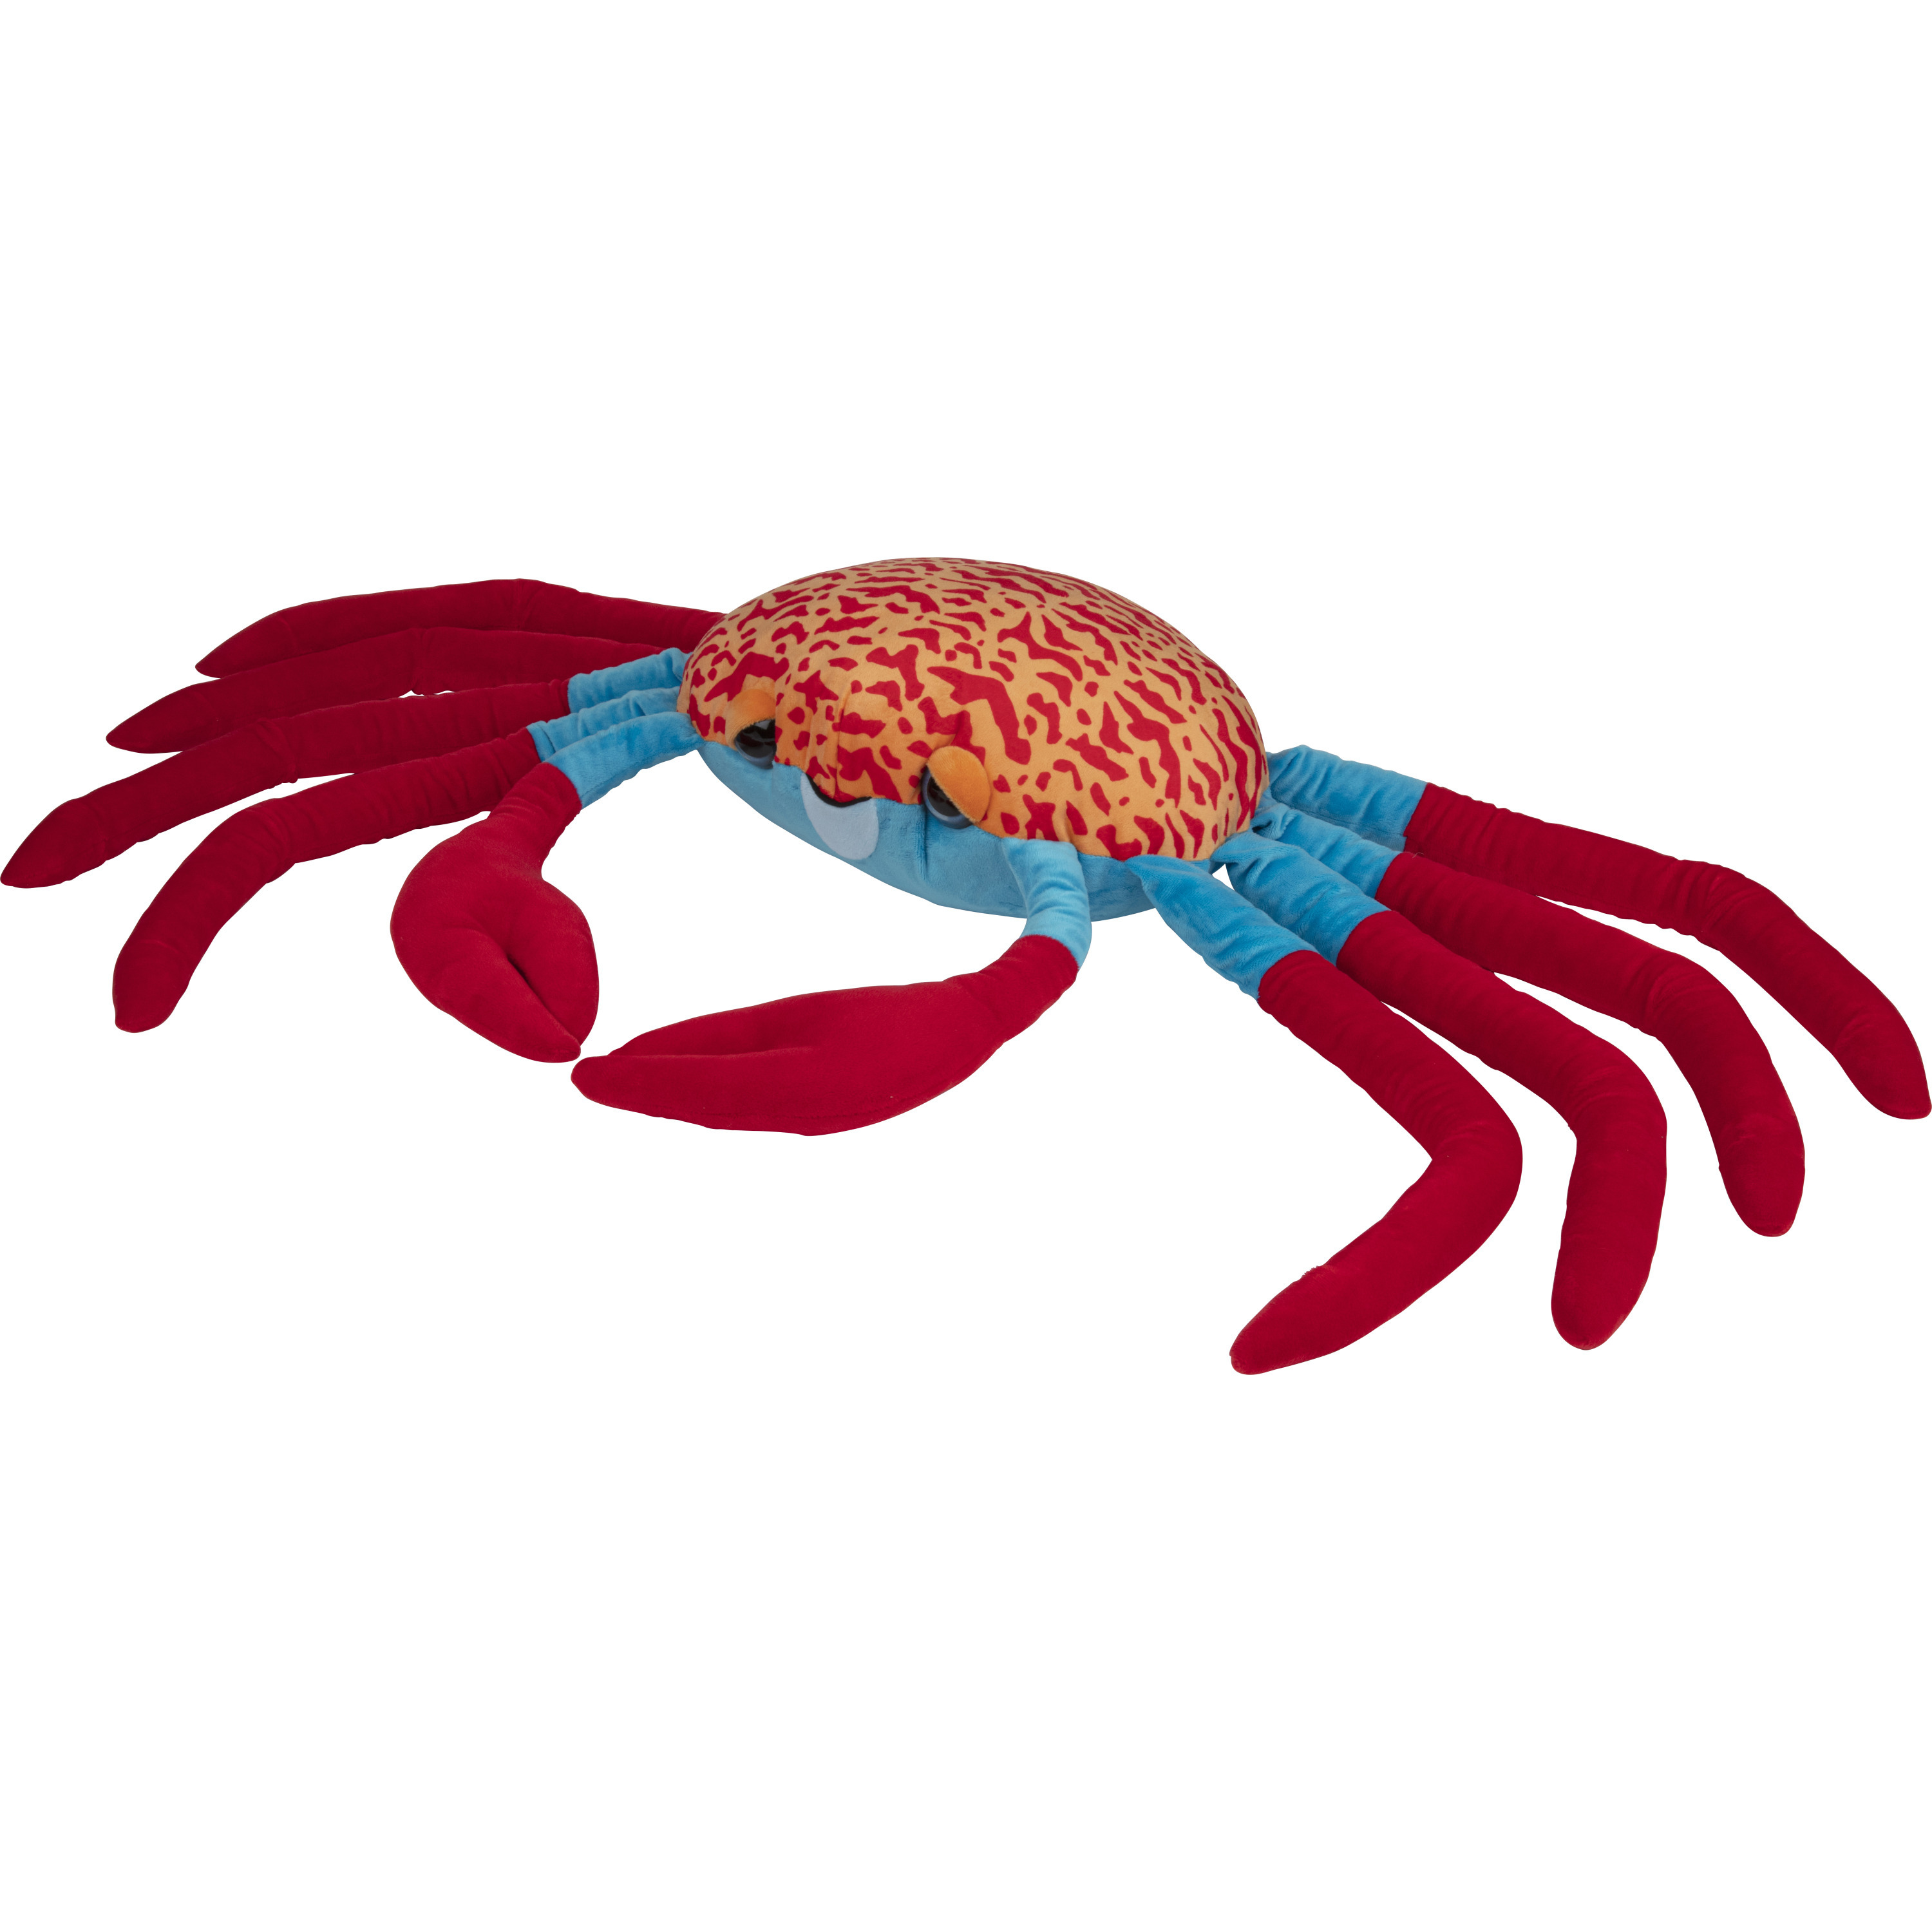 Nature Planet Knuffeldier Krab pluche stof premium knuffels rood blauw 120 cm